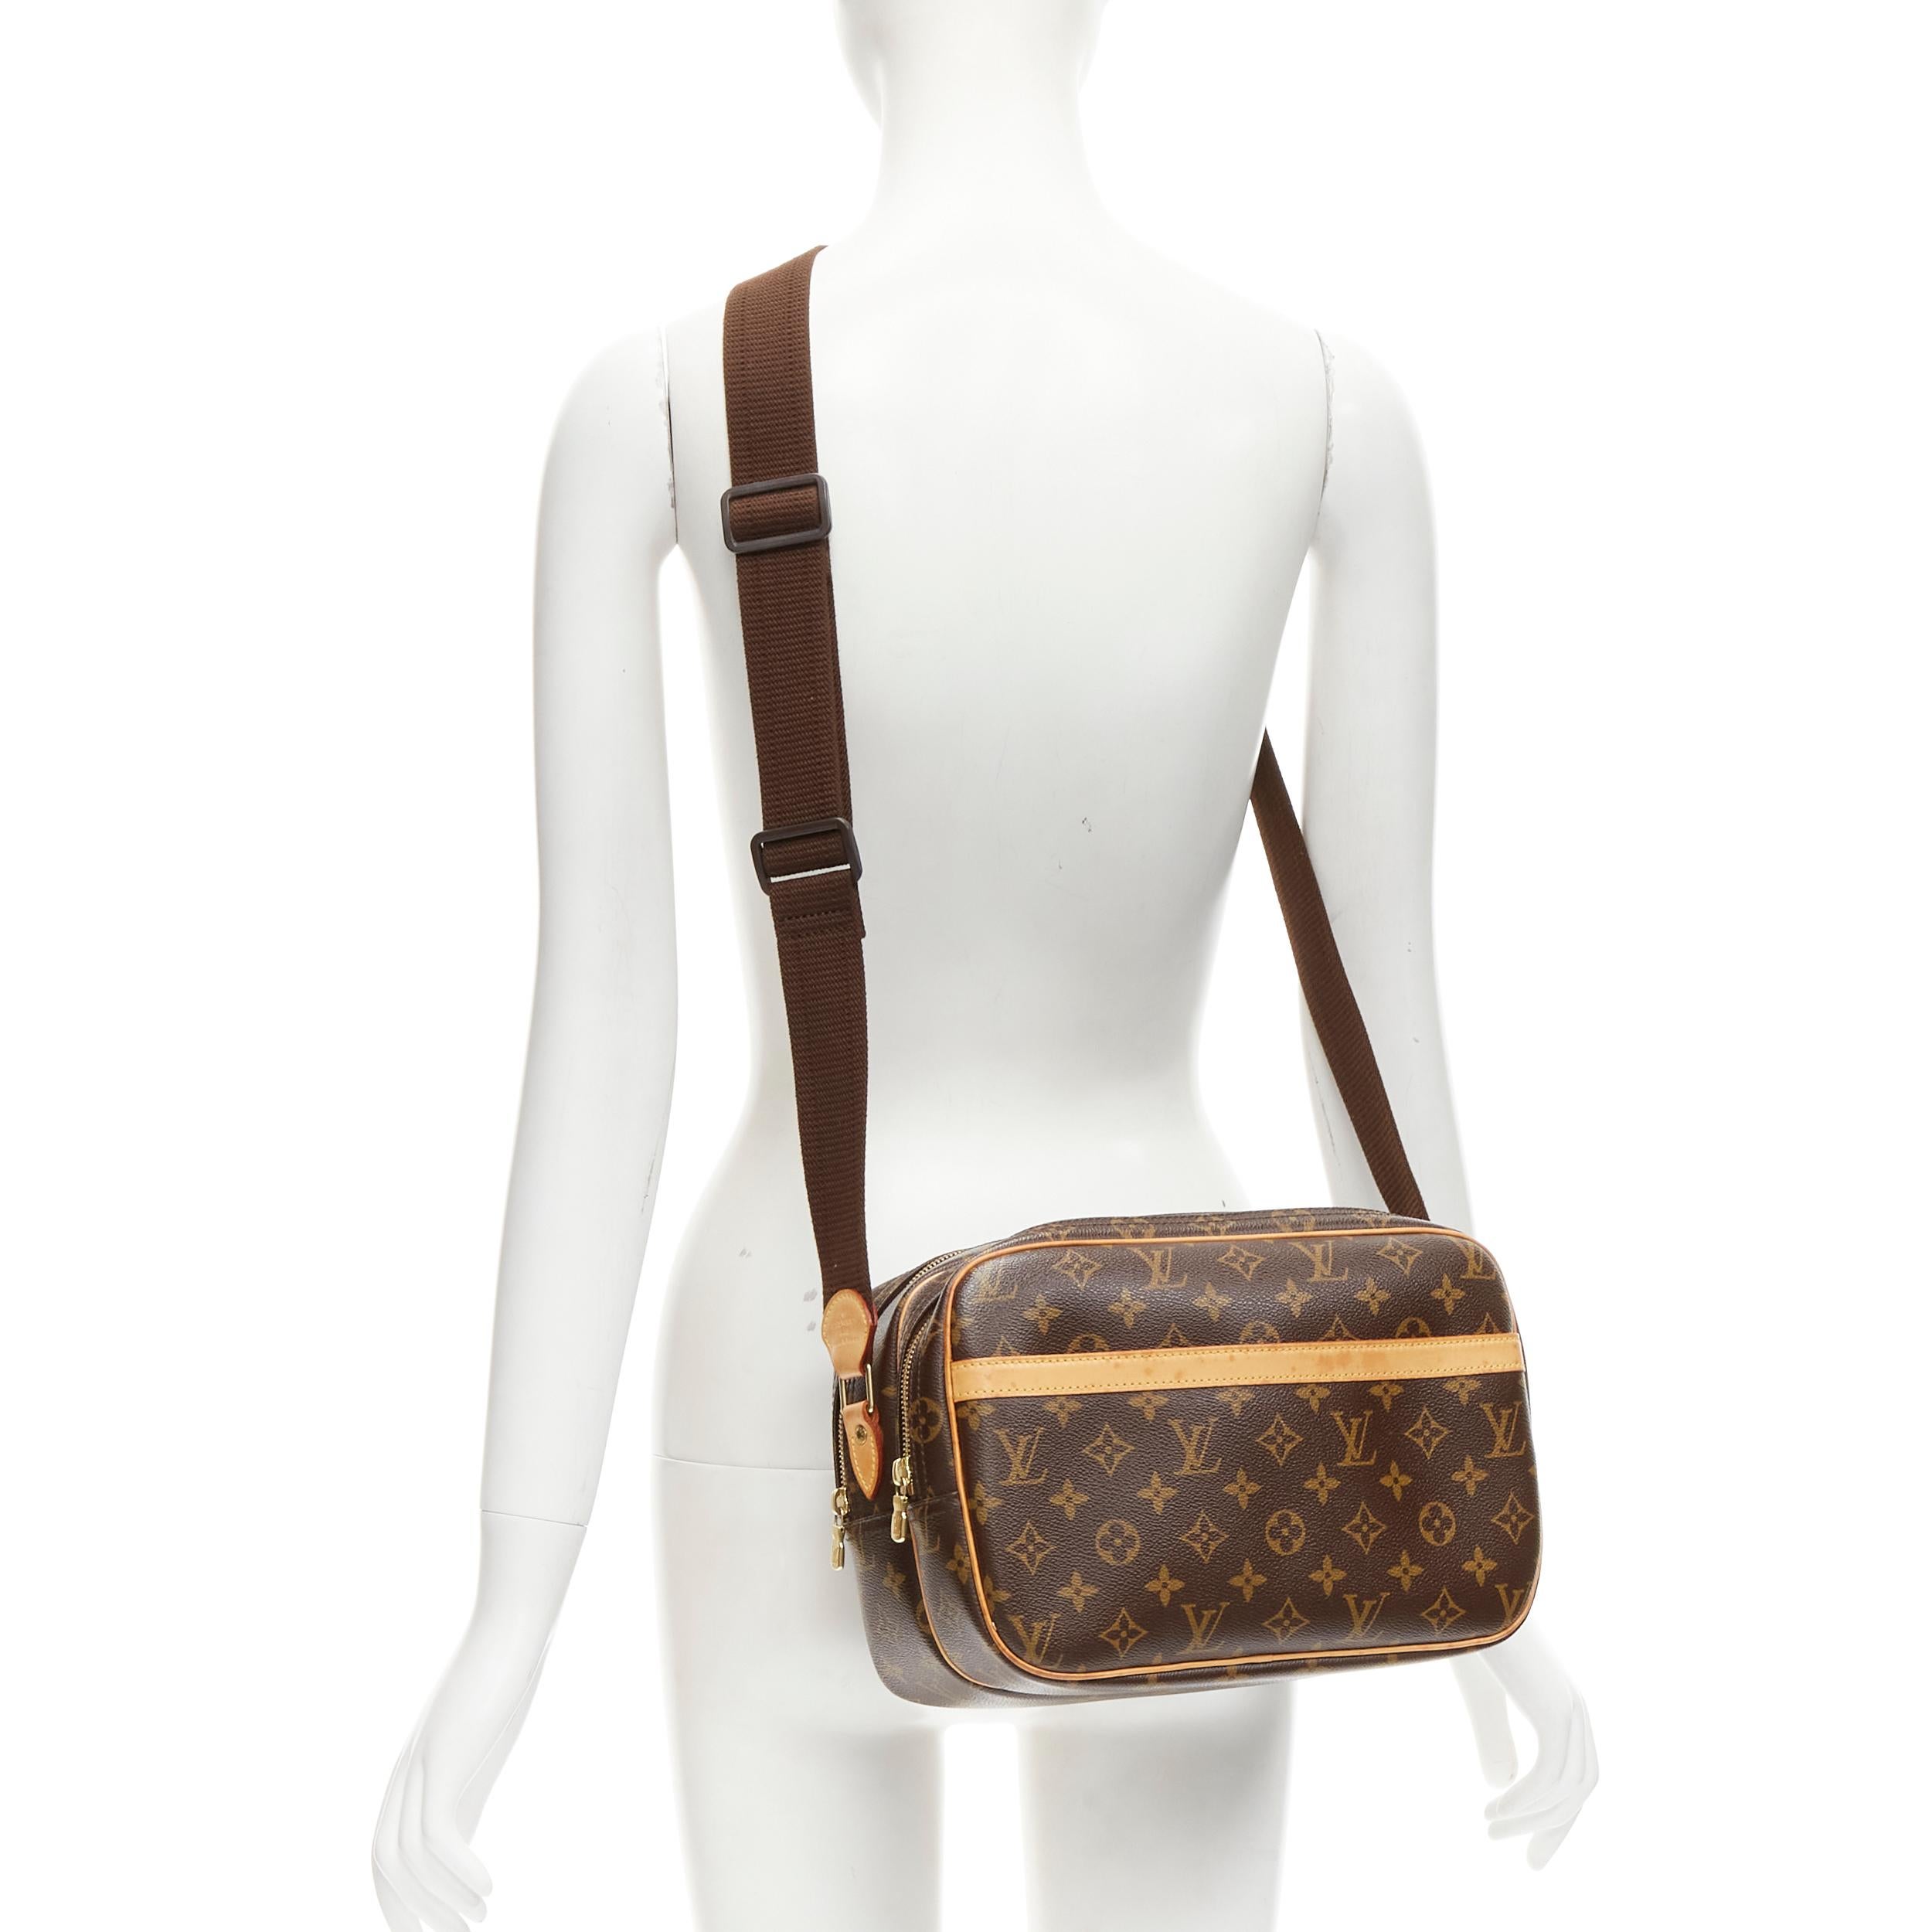 Louis Vuitton Air Bag - 9 For Sale on 1stDibs